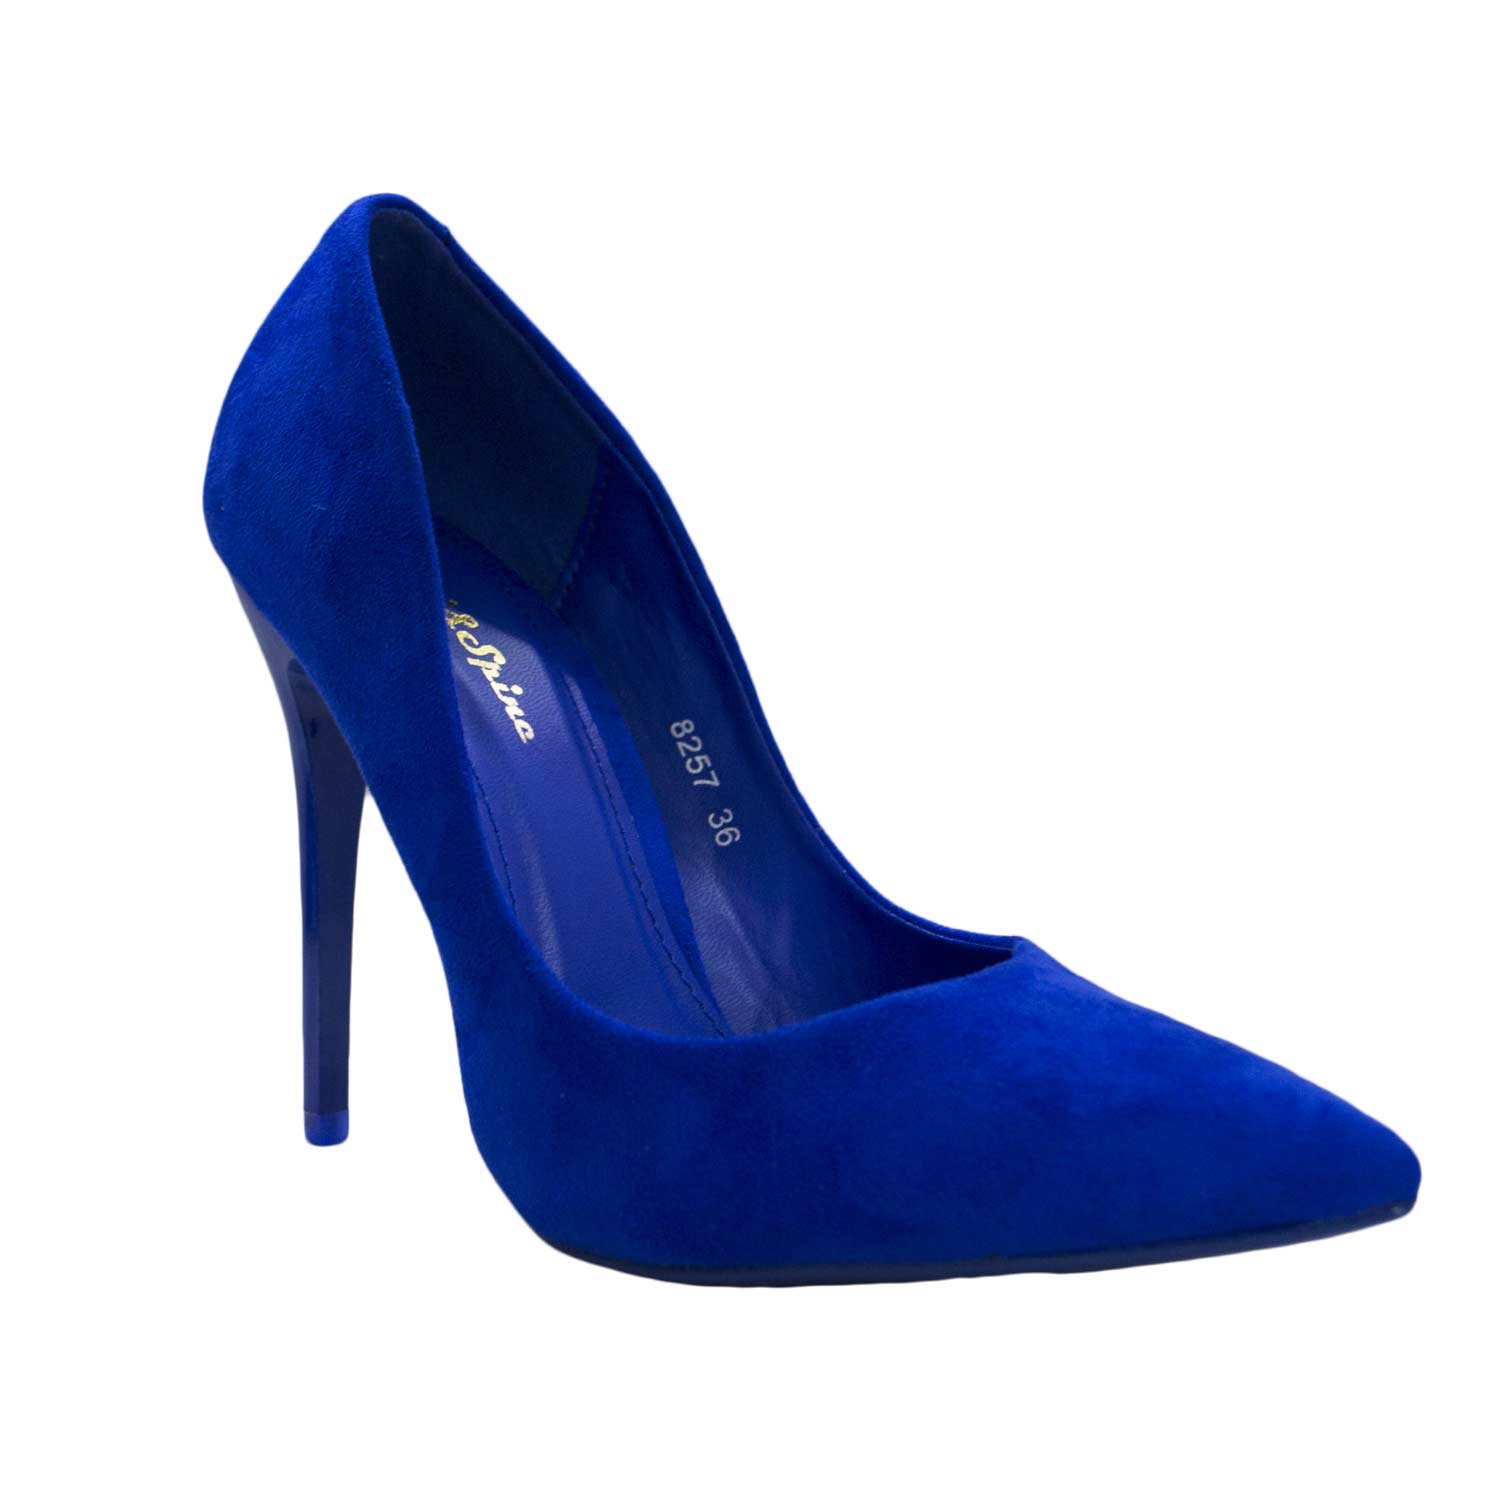 scarpe donna art 8257 tacco spillo blu camoscio tacco lucido moda tendenza  donna d�collet� Malu Shoes | MaluShoes